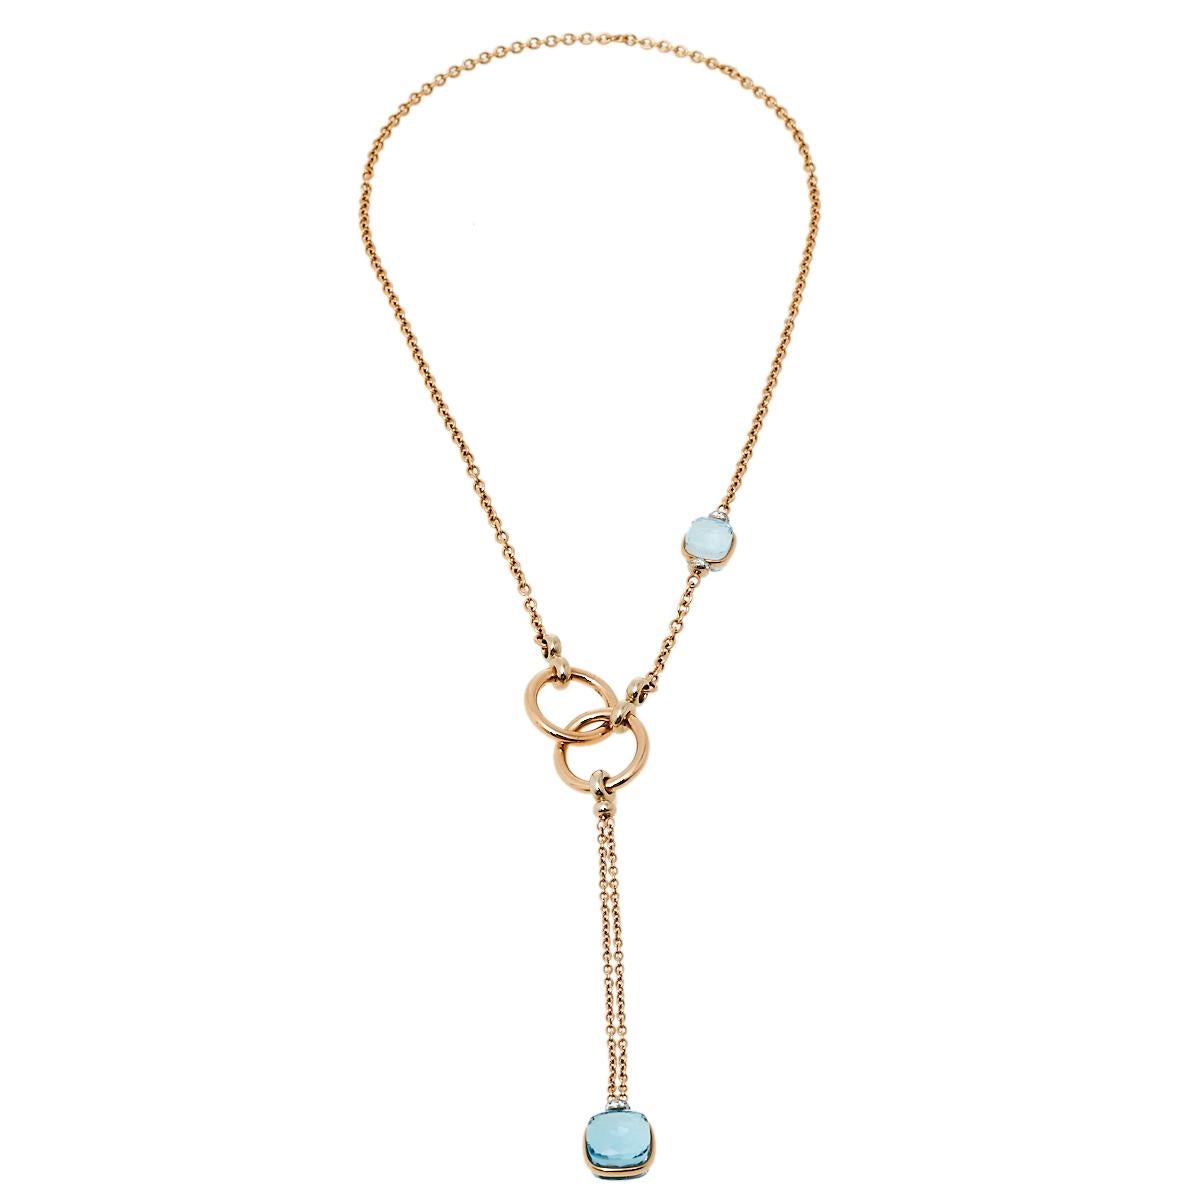 Contemporary Pomellato Blue Topaz Diamond 18K Rose Gold Necklace and Long Earrings Set